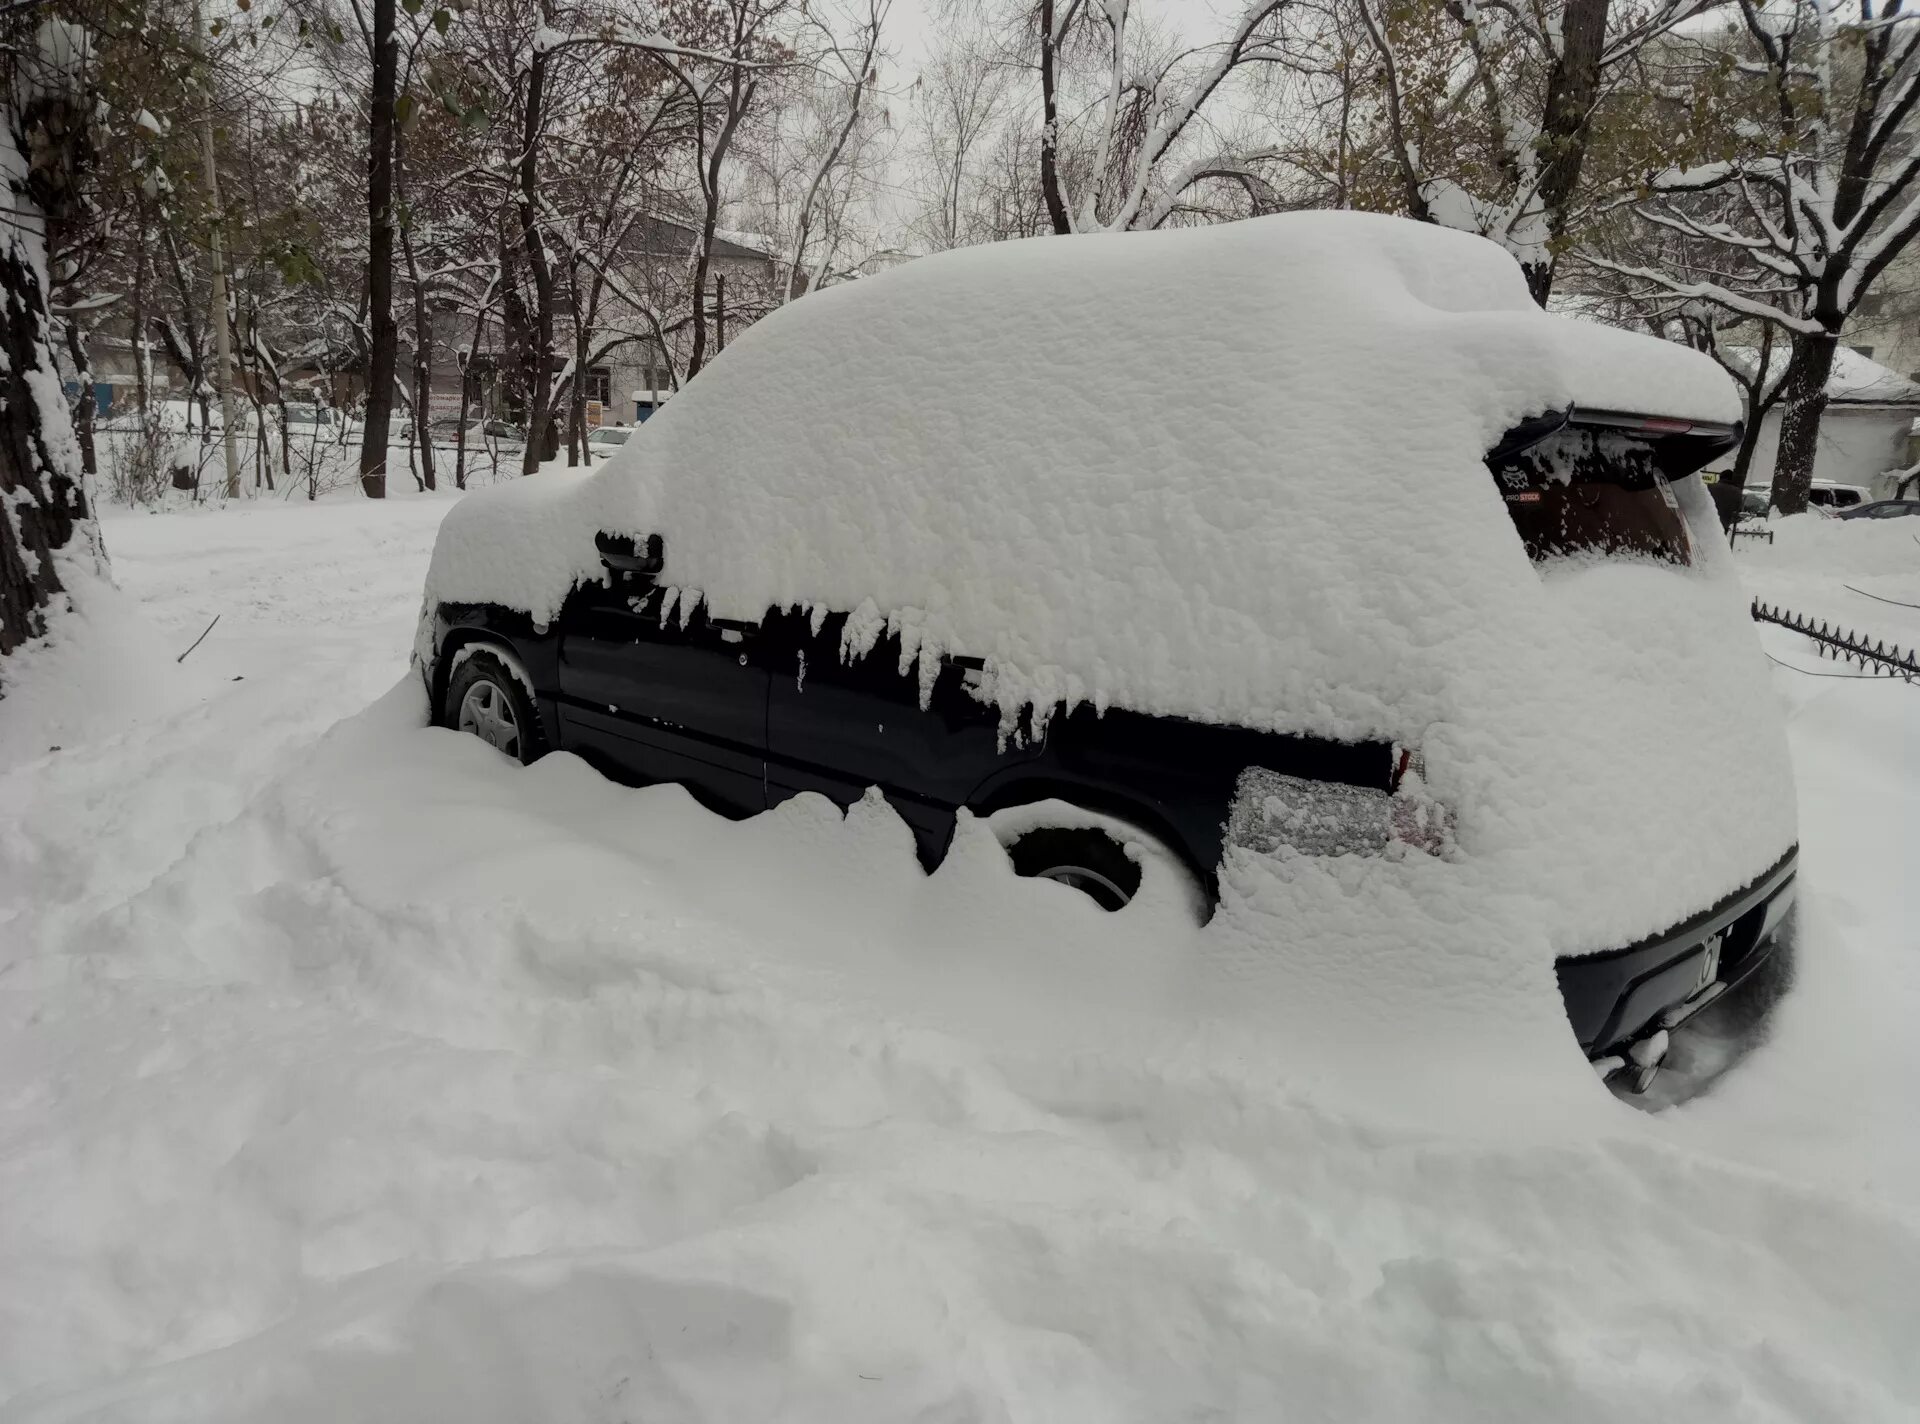 Машина снежка. Машина завалена снегом. Снеговая машина. Машина в сугробе. Машина в снегу.